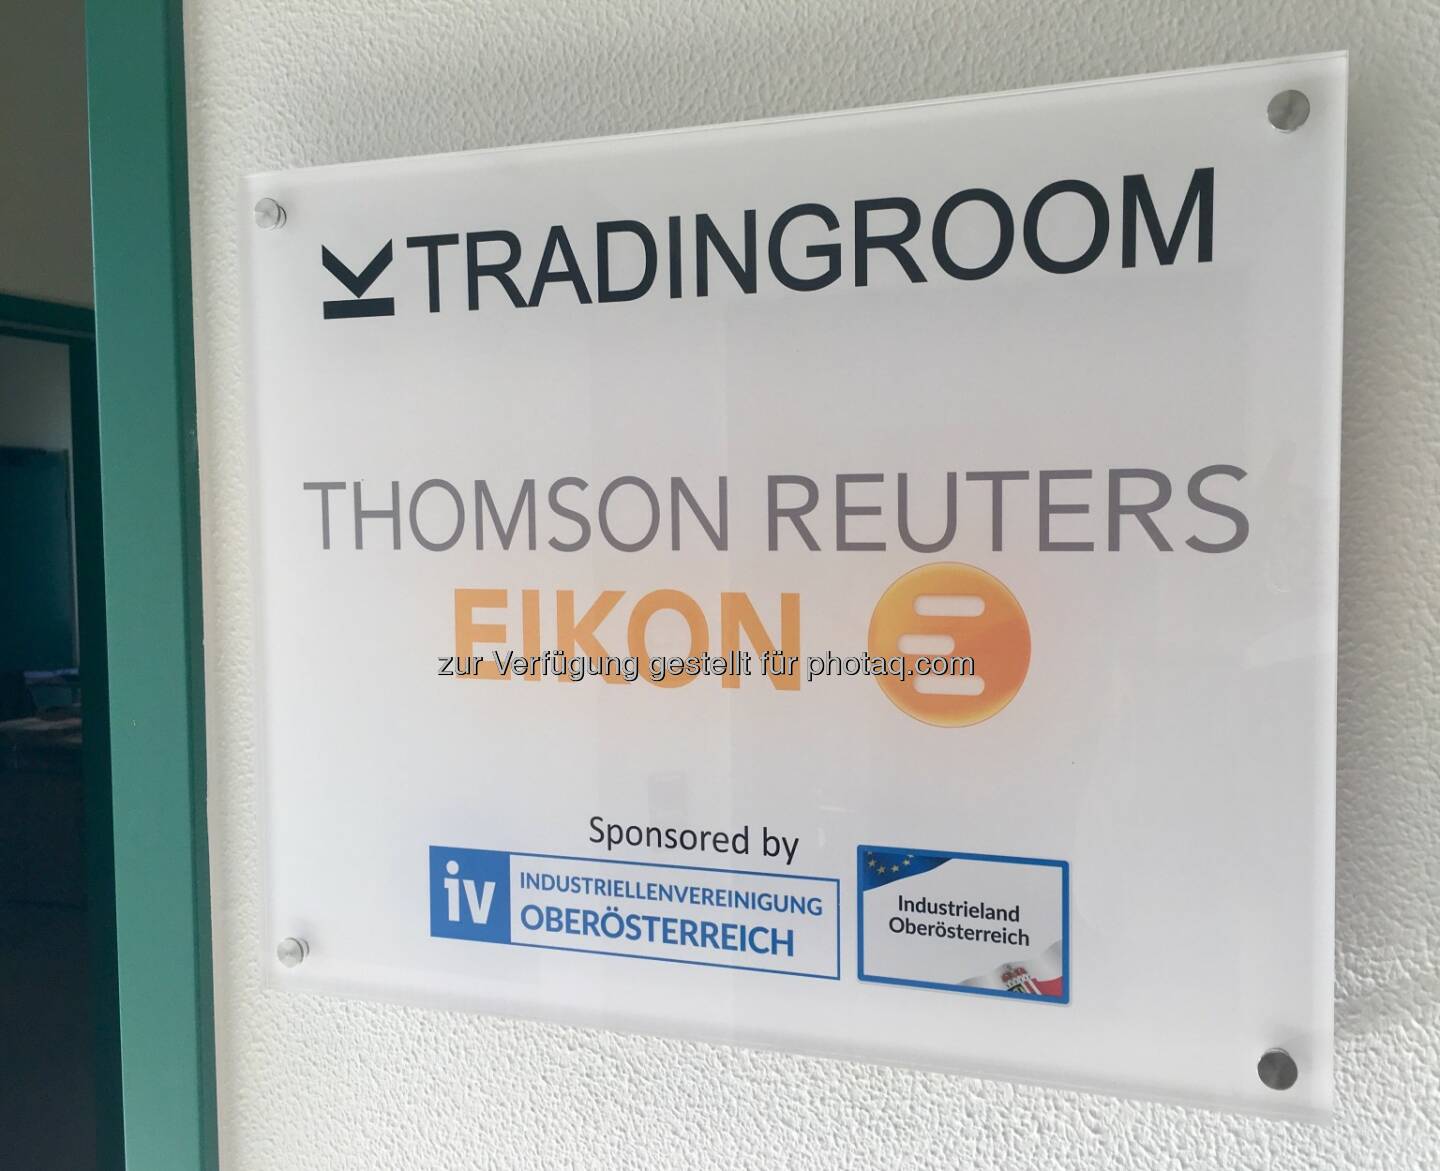 Tradingroom Thomson Reuters Eikon